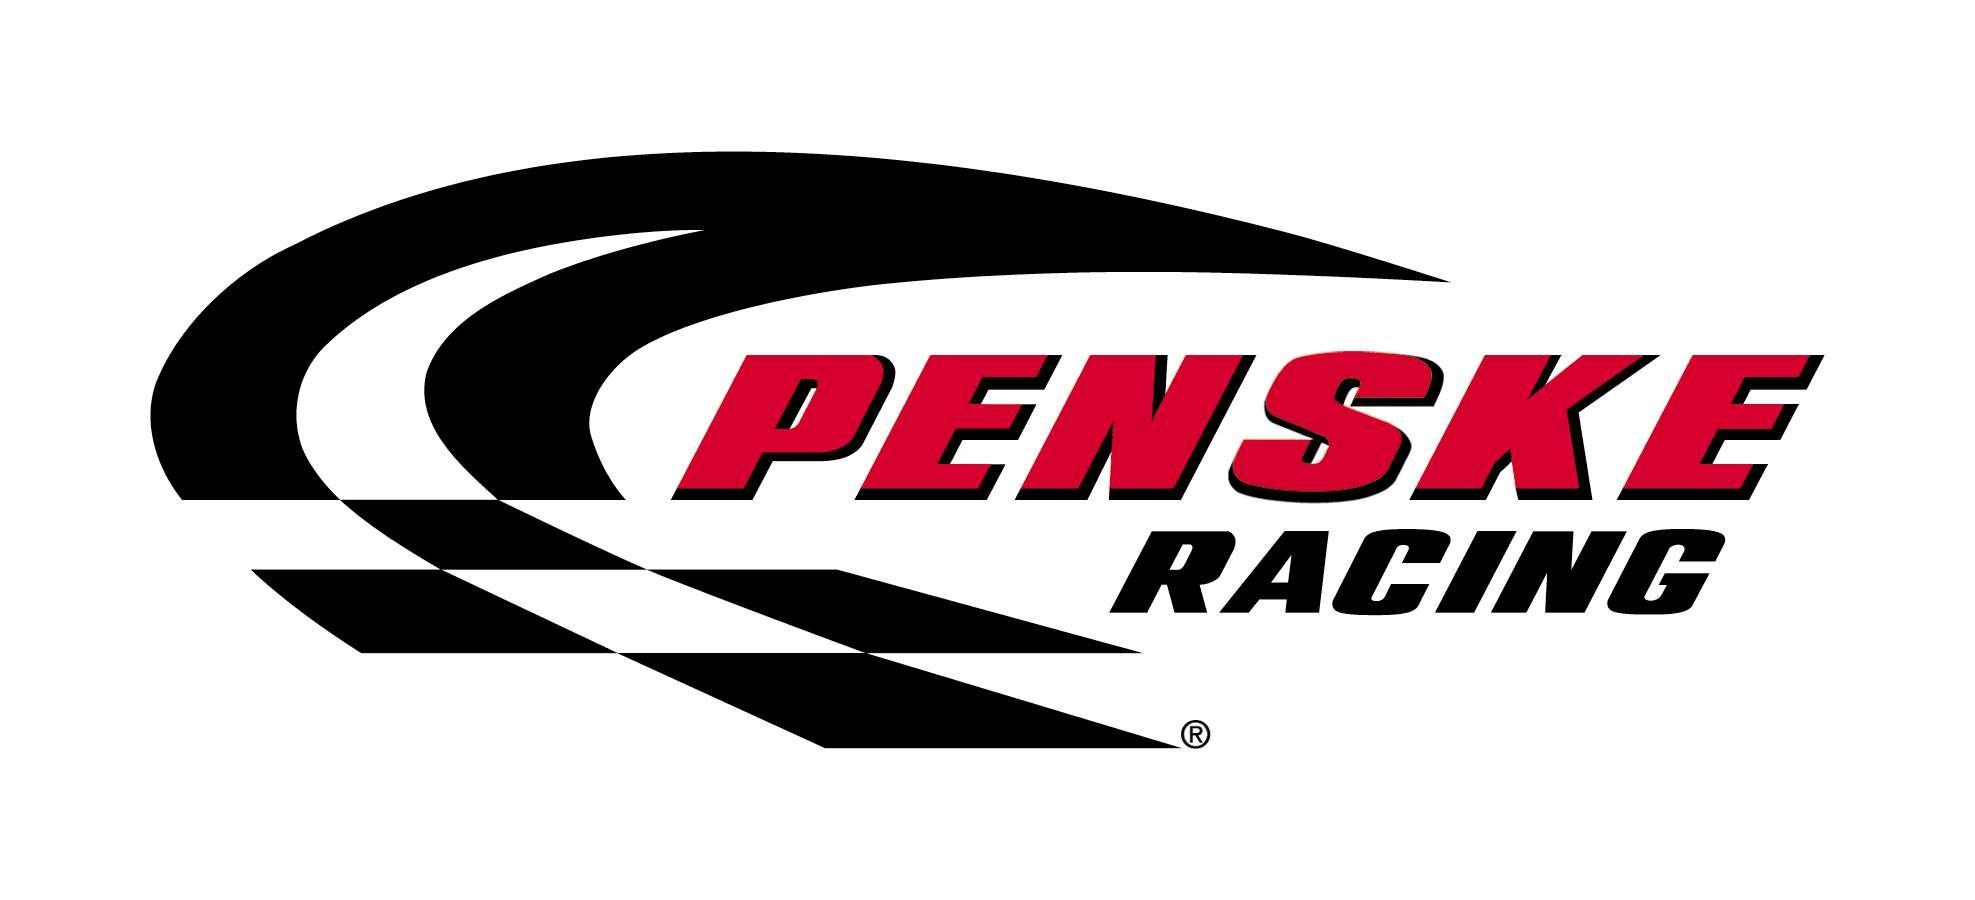 NASCAR Race Logo - Penske Racing | Sports | Racing, Indy cars, Nascar